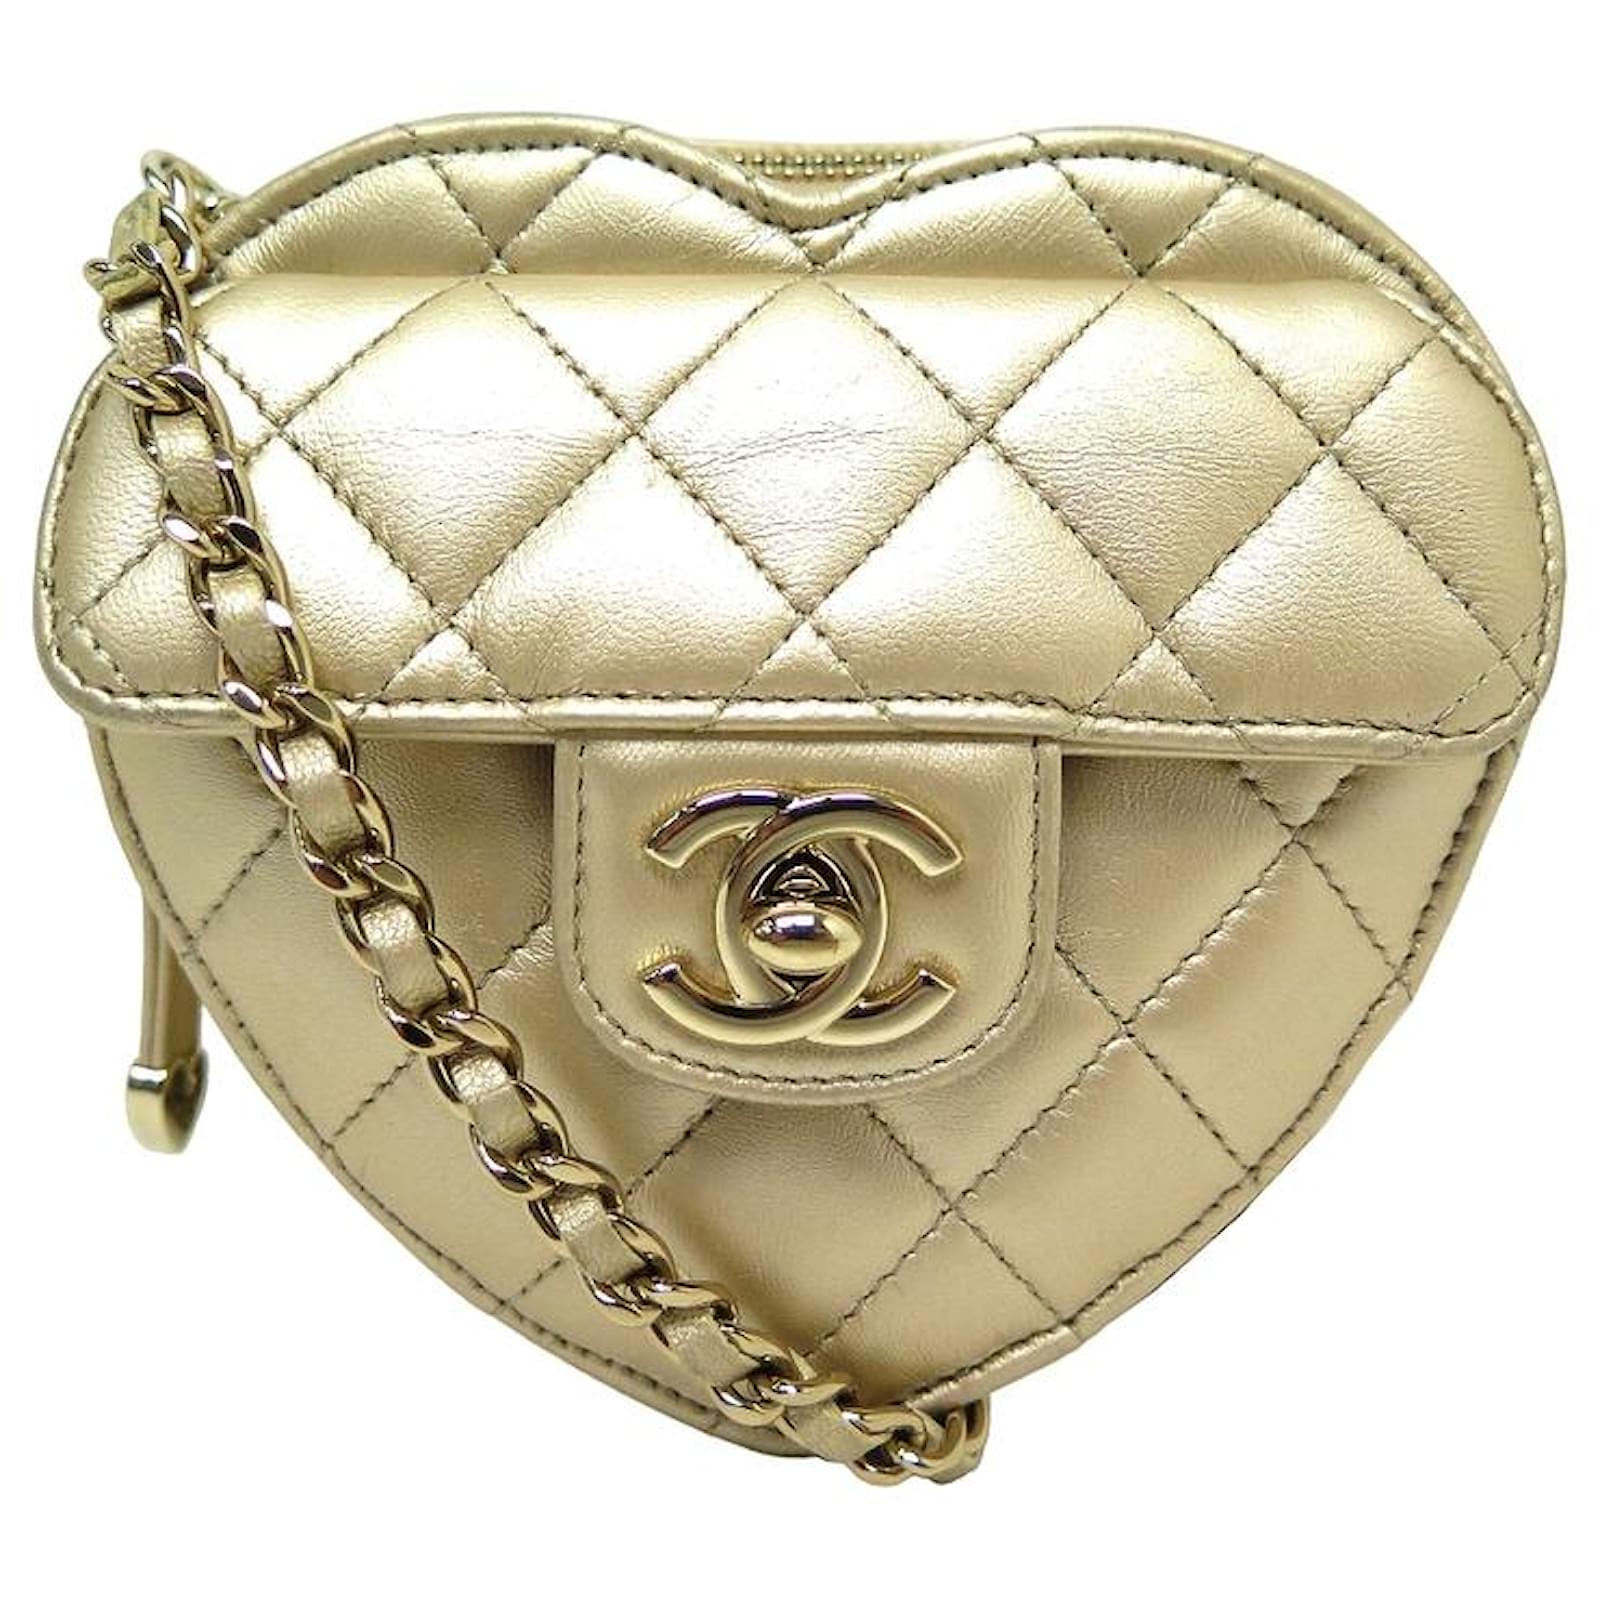 Clutch Bags Chanel Chanel Handbag Mini Heart Pouch Champagne Attributes PM Clutch Bag